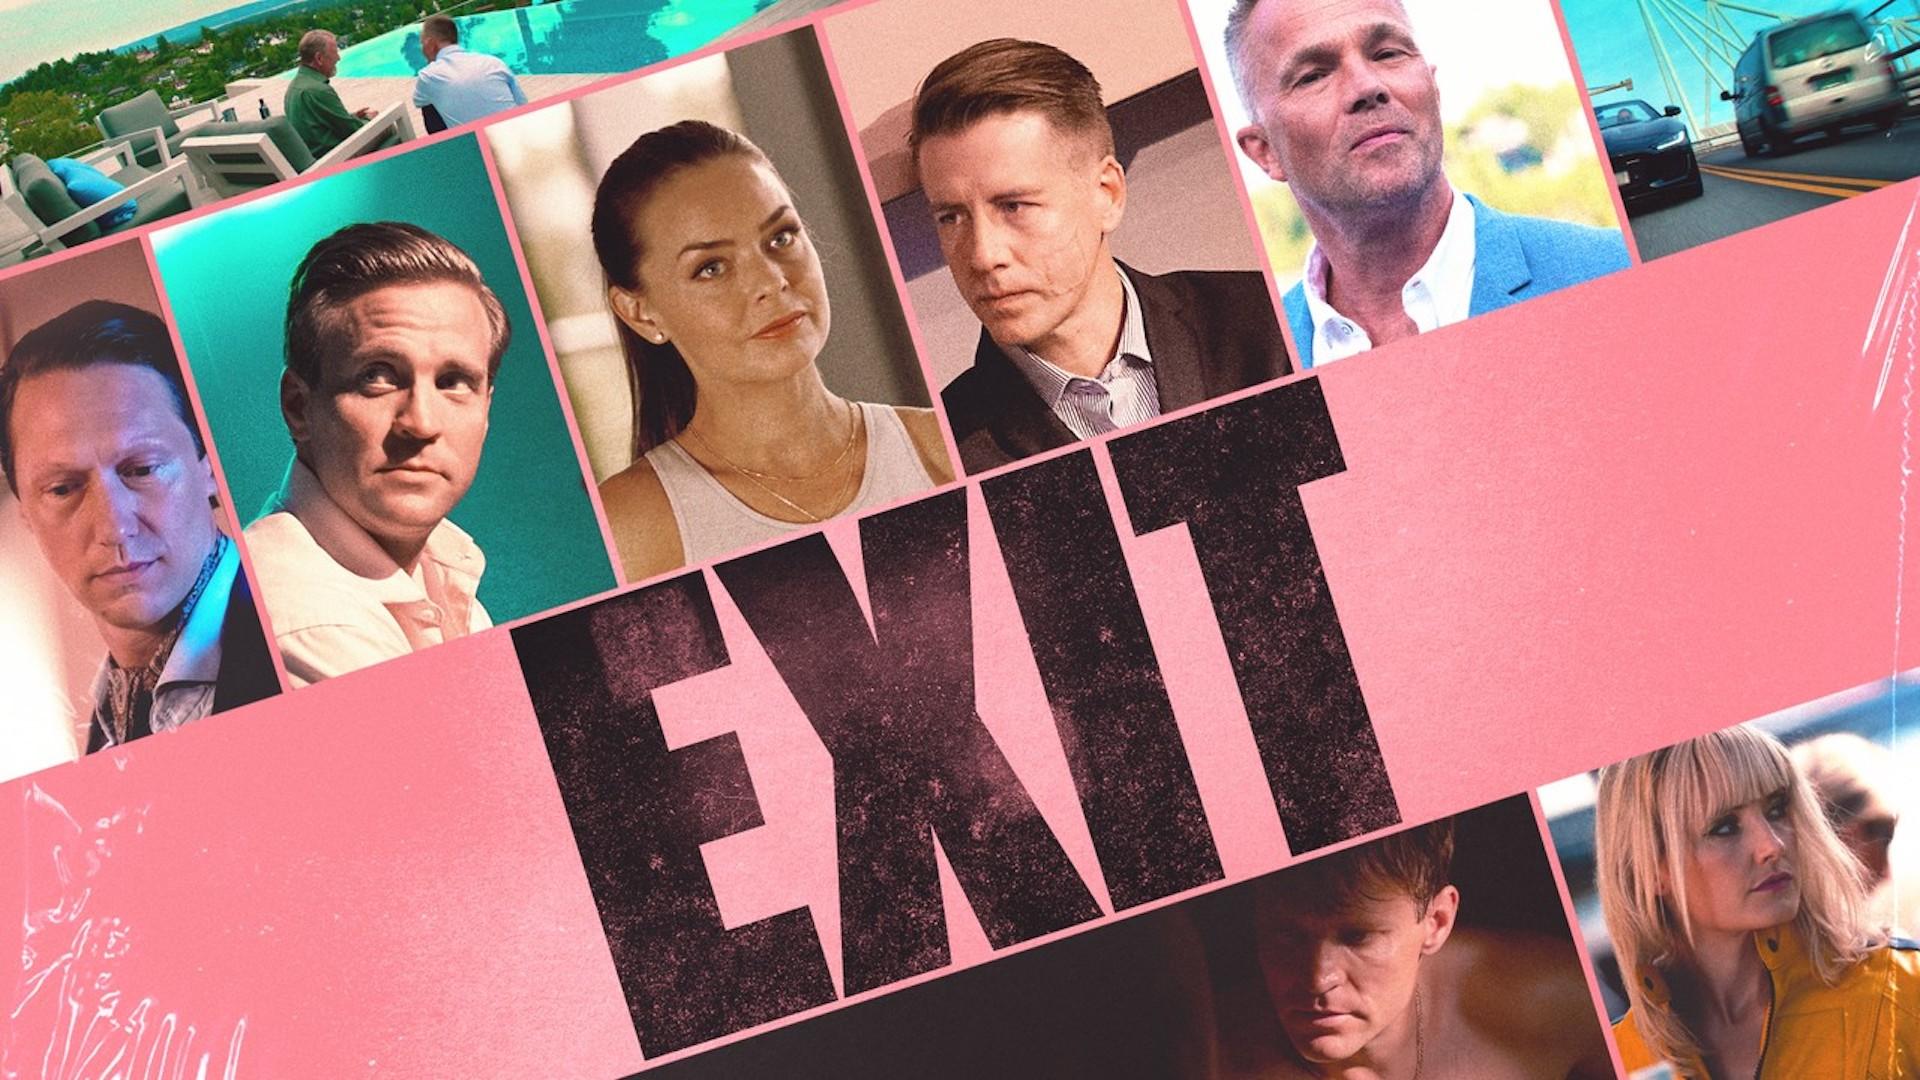 Exit (2019)